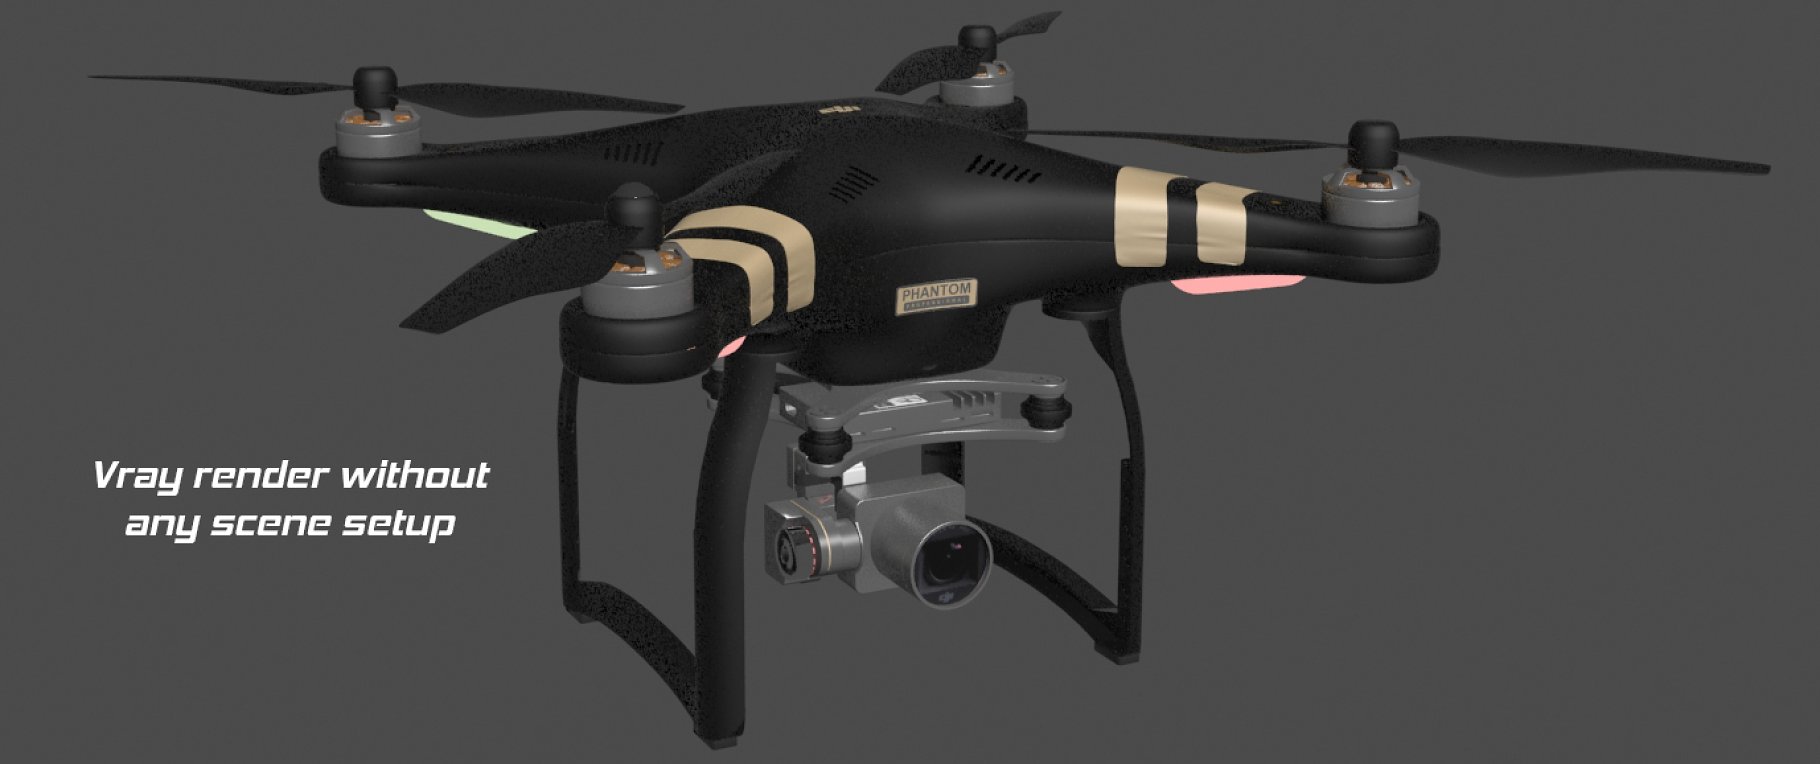 Beautiful 3d model of a black drone DJI Phantom 3